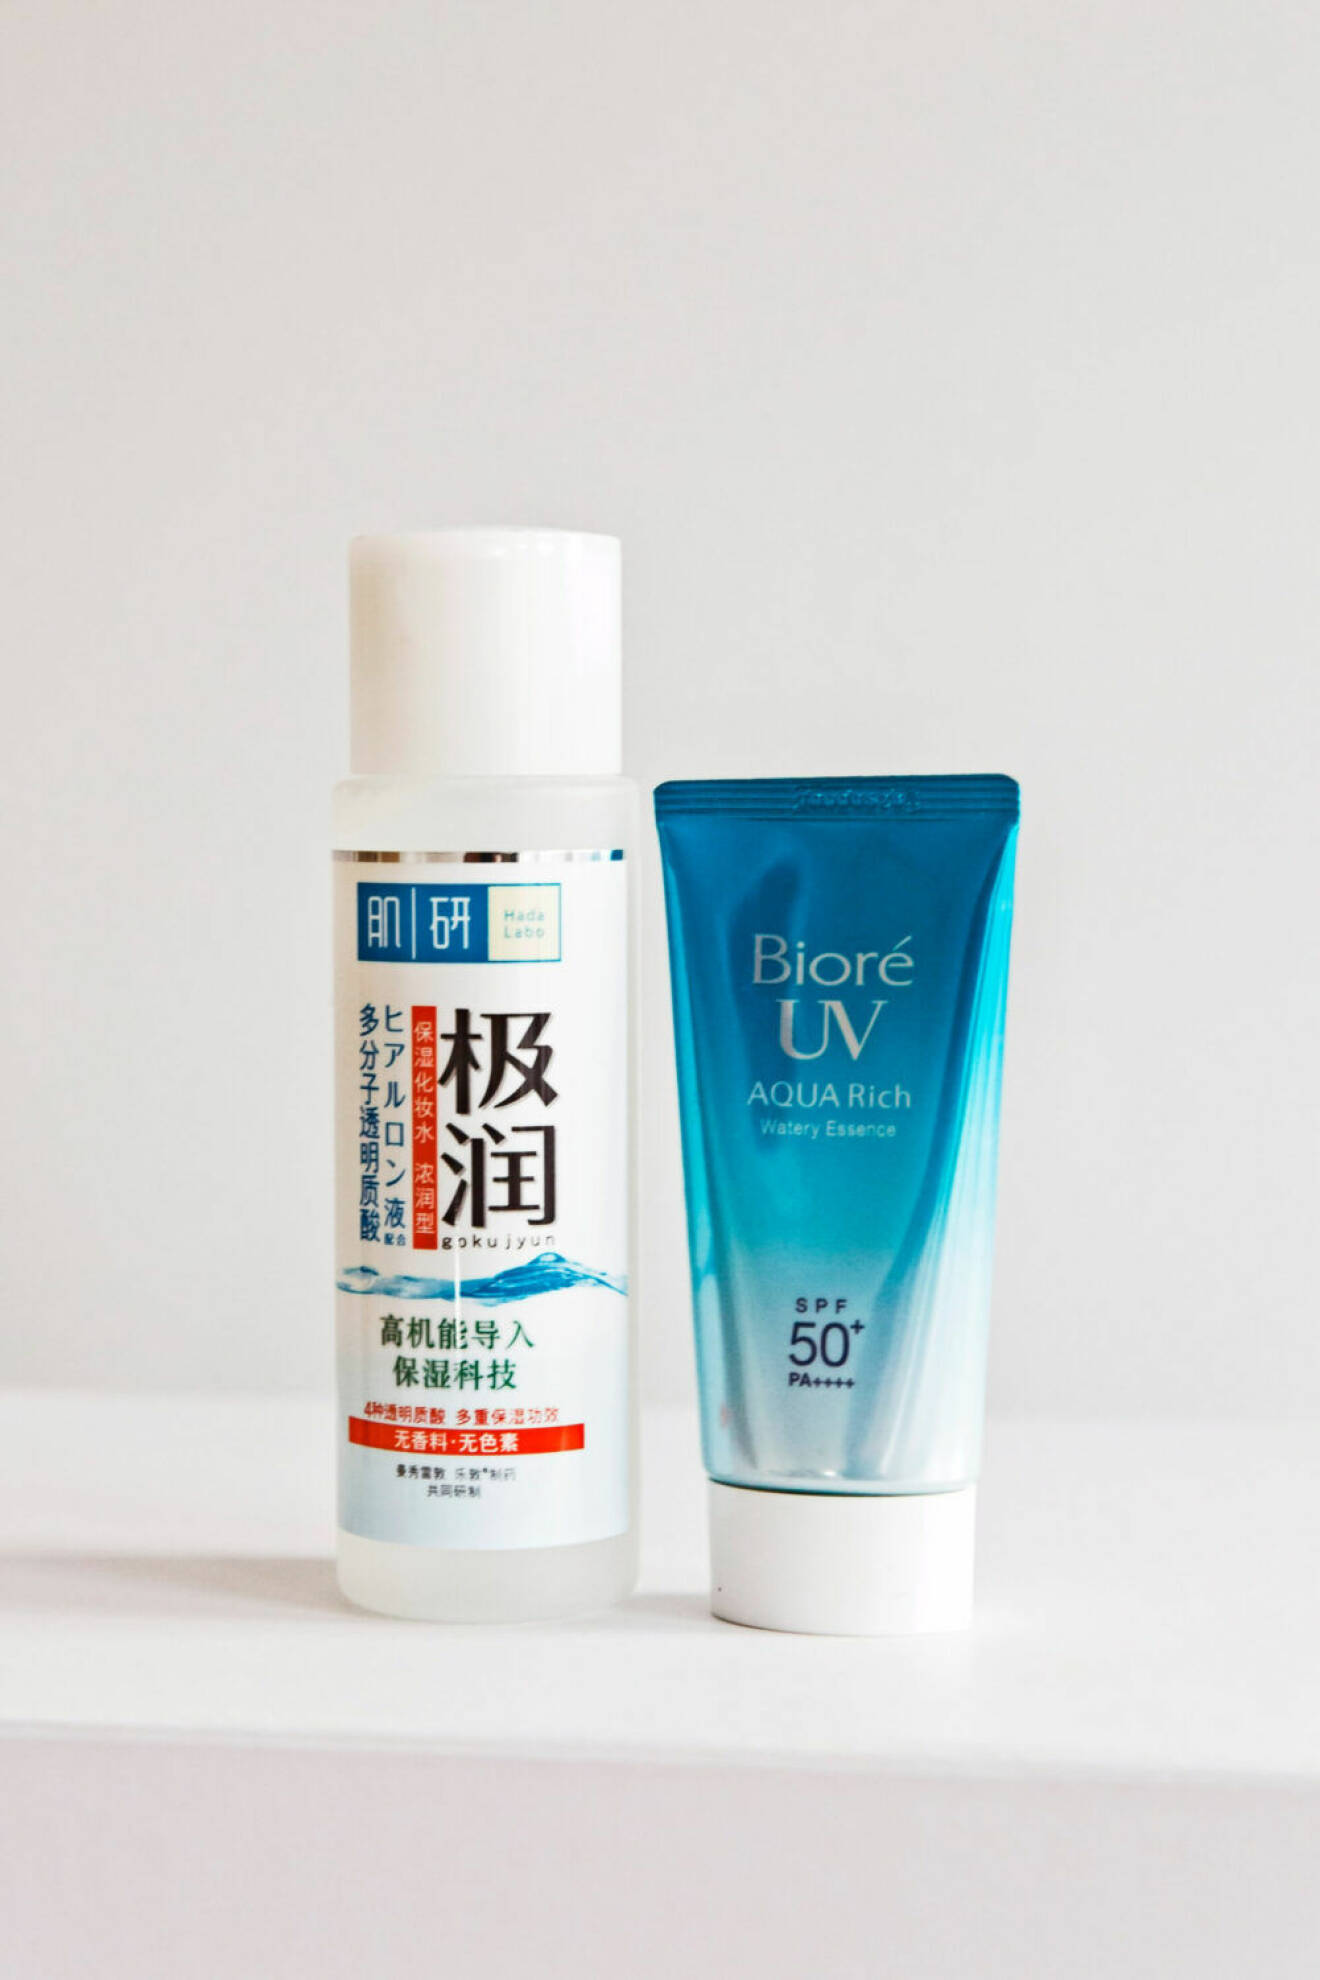 Produkterna Bioré UVaquarich och Hada Labo Hyaluronic Acid lotion